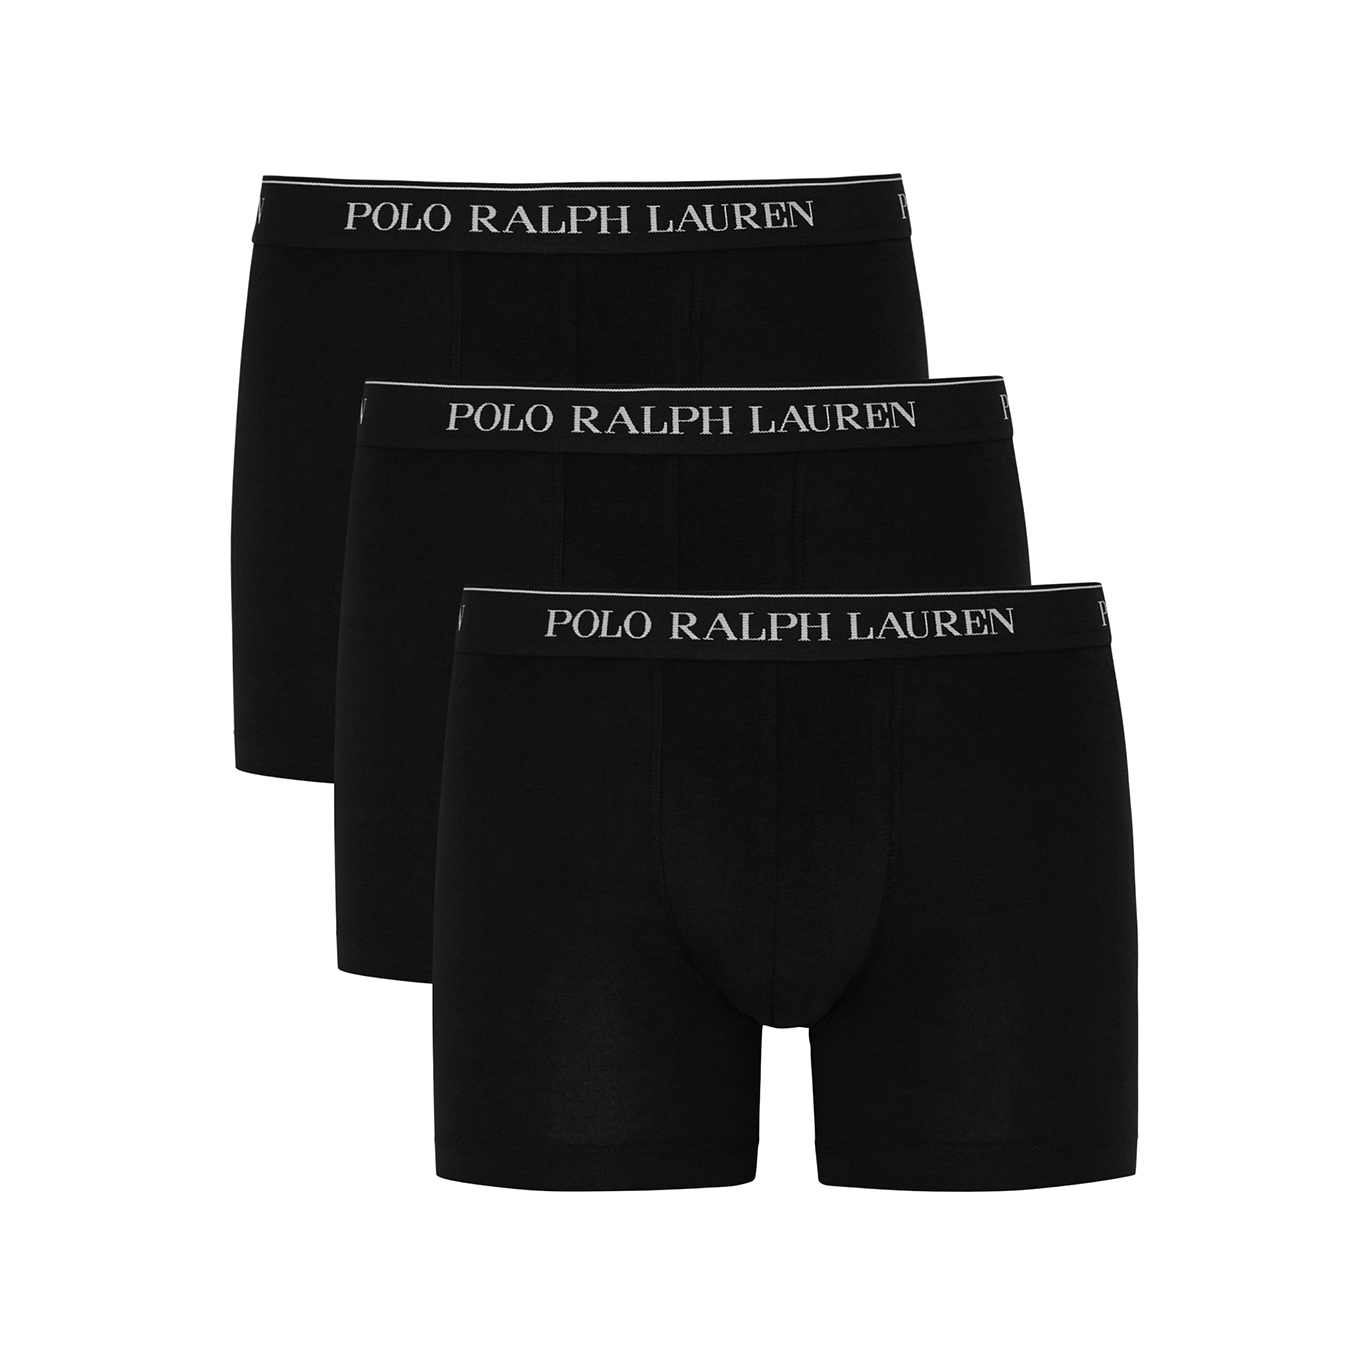 Polo Ralph Lauren Black Stretch-cotton Boxer Briefs - Set Of Three - XL